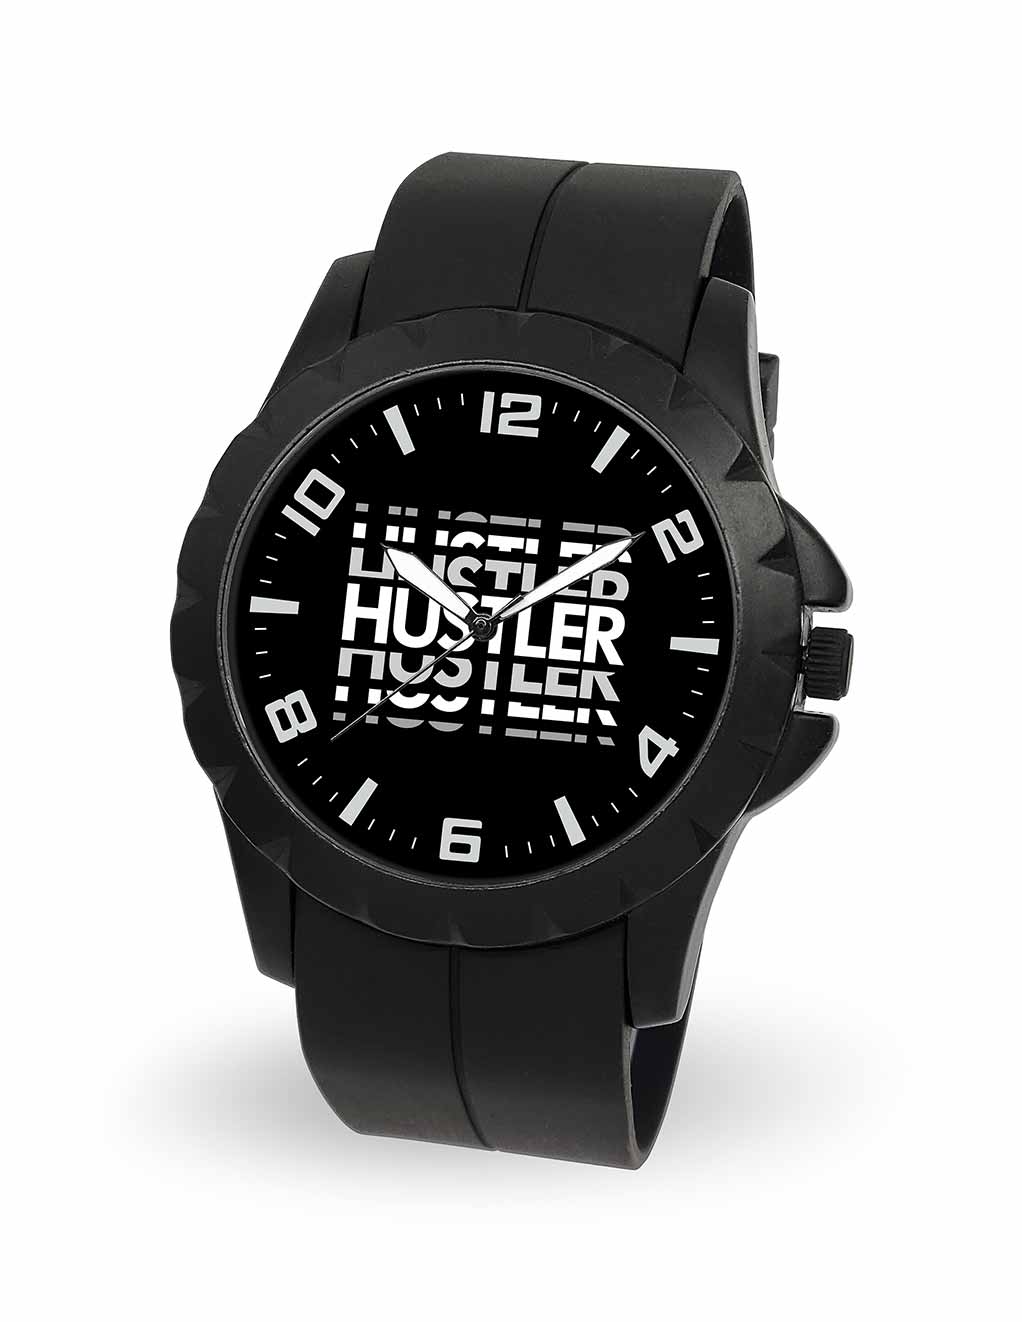 HUSTLER® Moto Collection Watch- Black- front